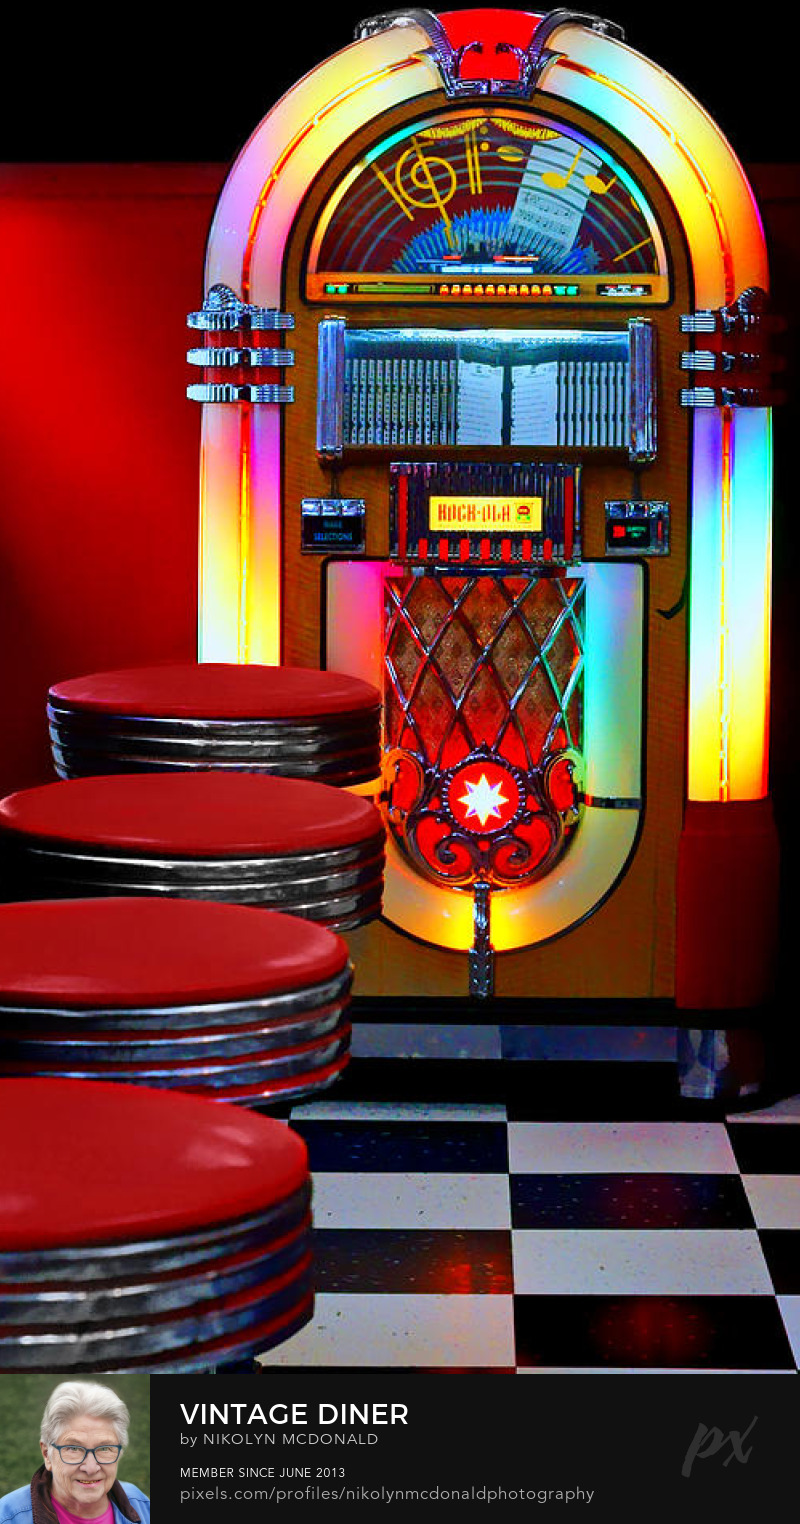 Wurlitzer jukebox red vinyl and chrome stools by nikolyn mcdonald